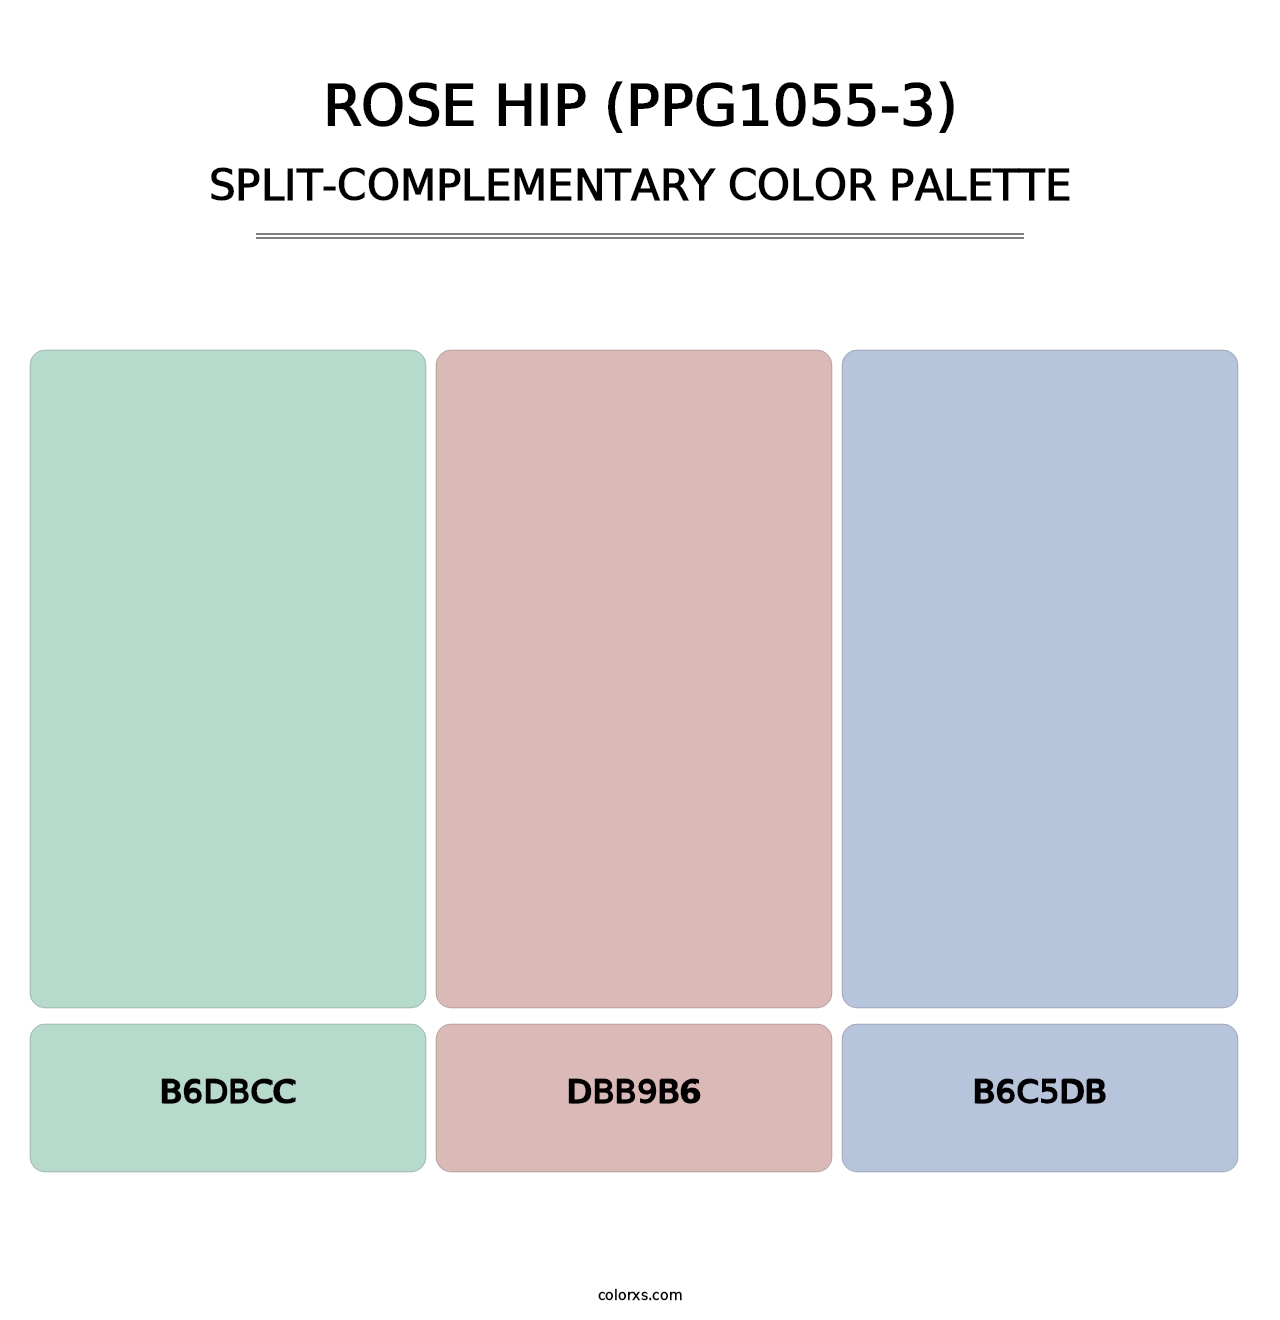 Rose Hip (PPG1055-3) - Split-Complementary Color Palette